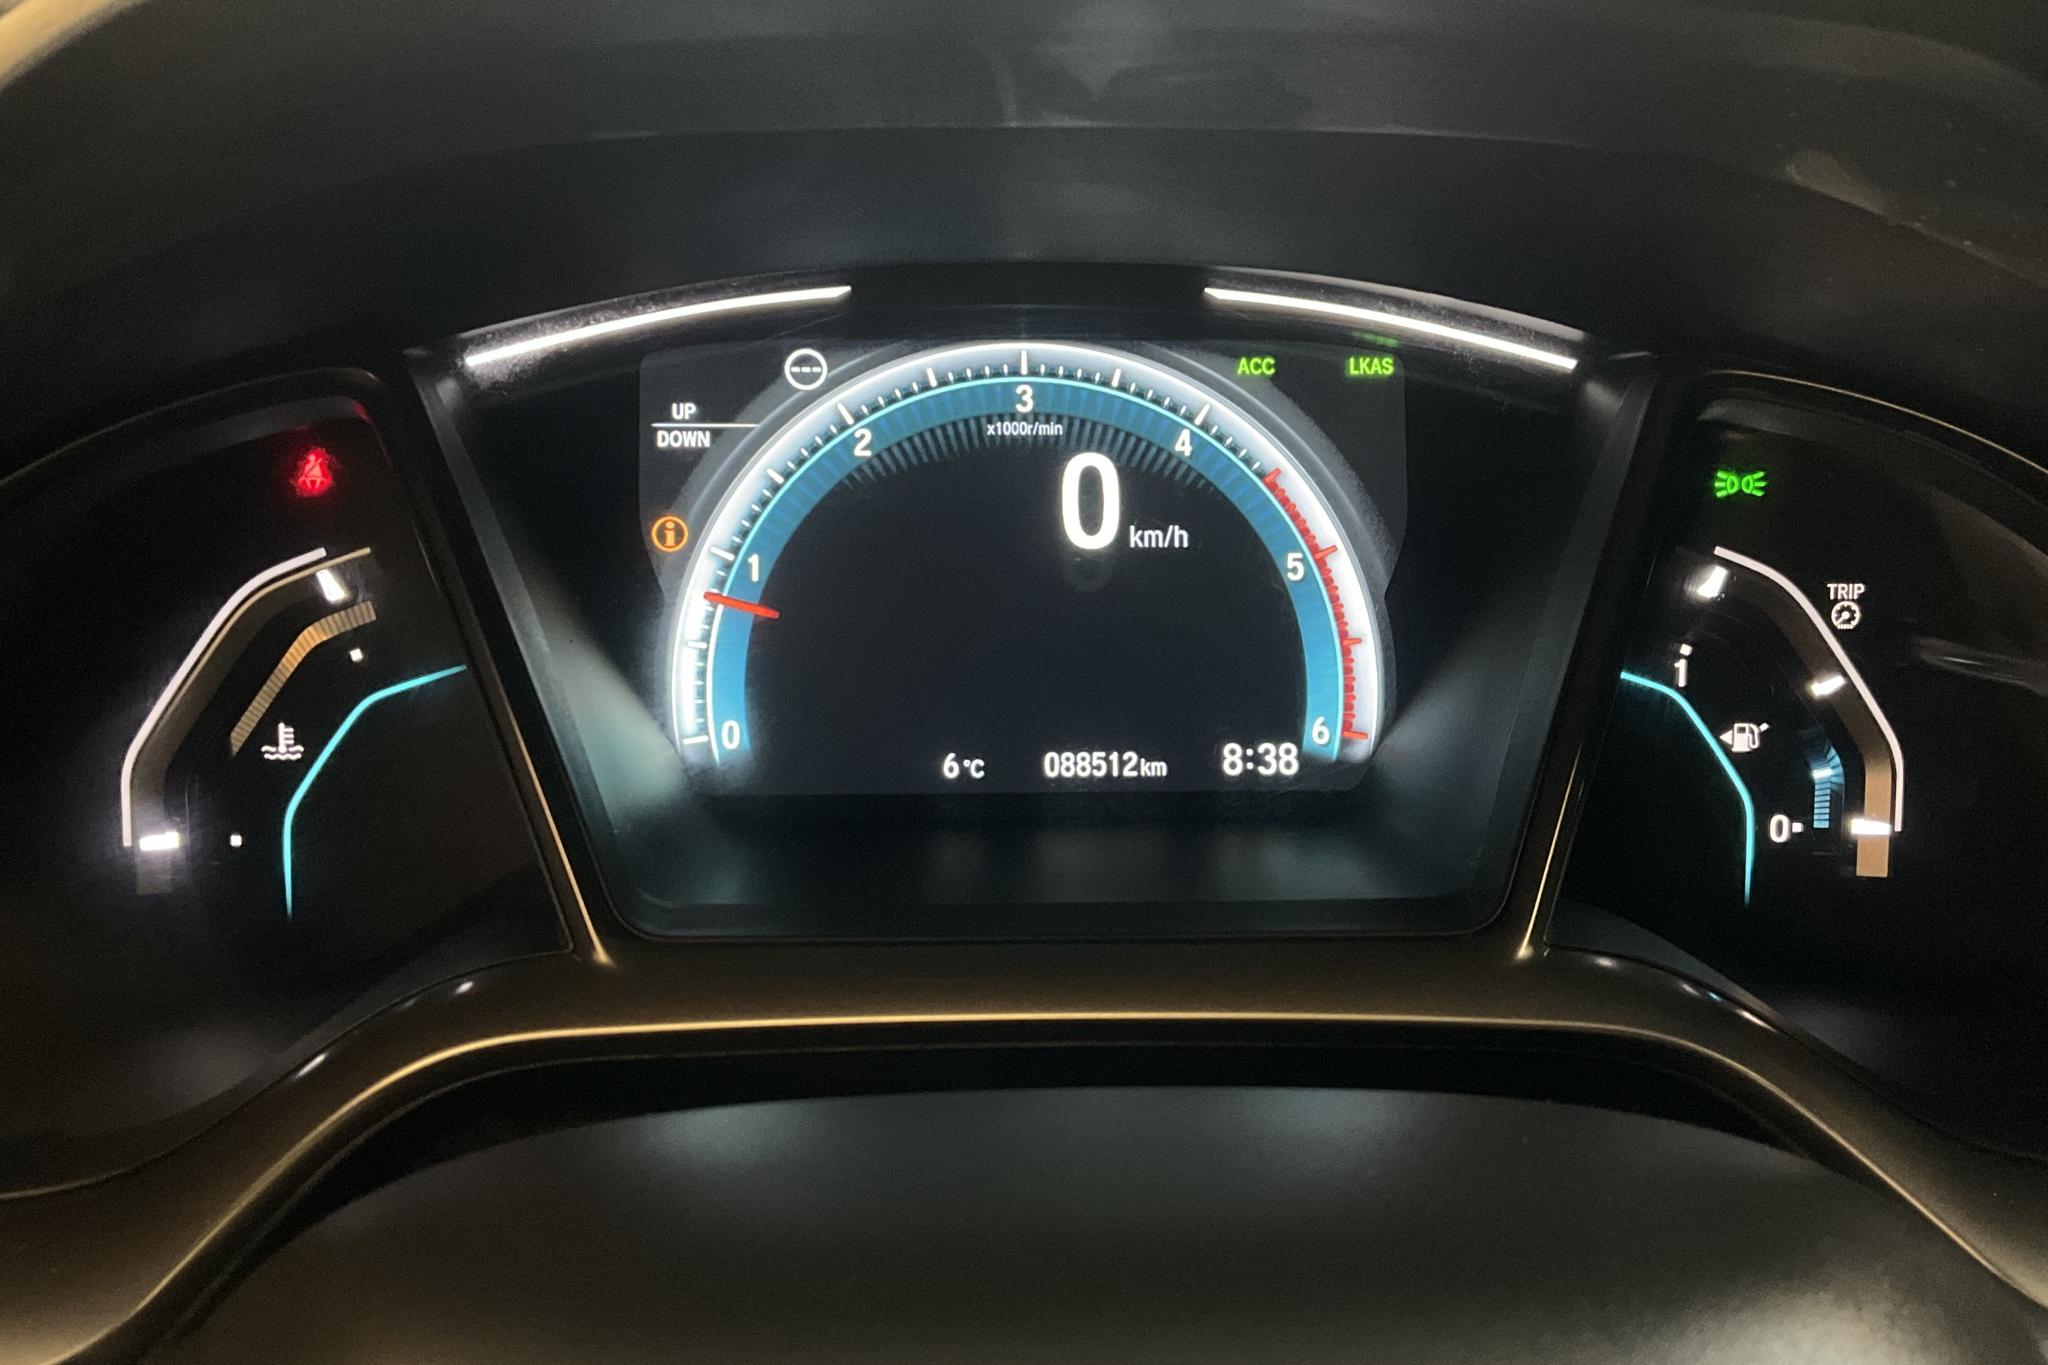 Honda Civic 1.6 i-DTEC 5dr (120hk) - 88 510 km - Manual - Dark Grey - 2018